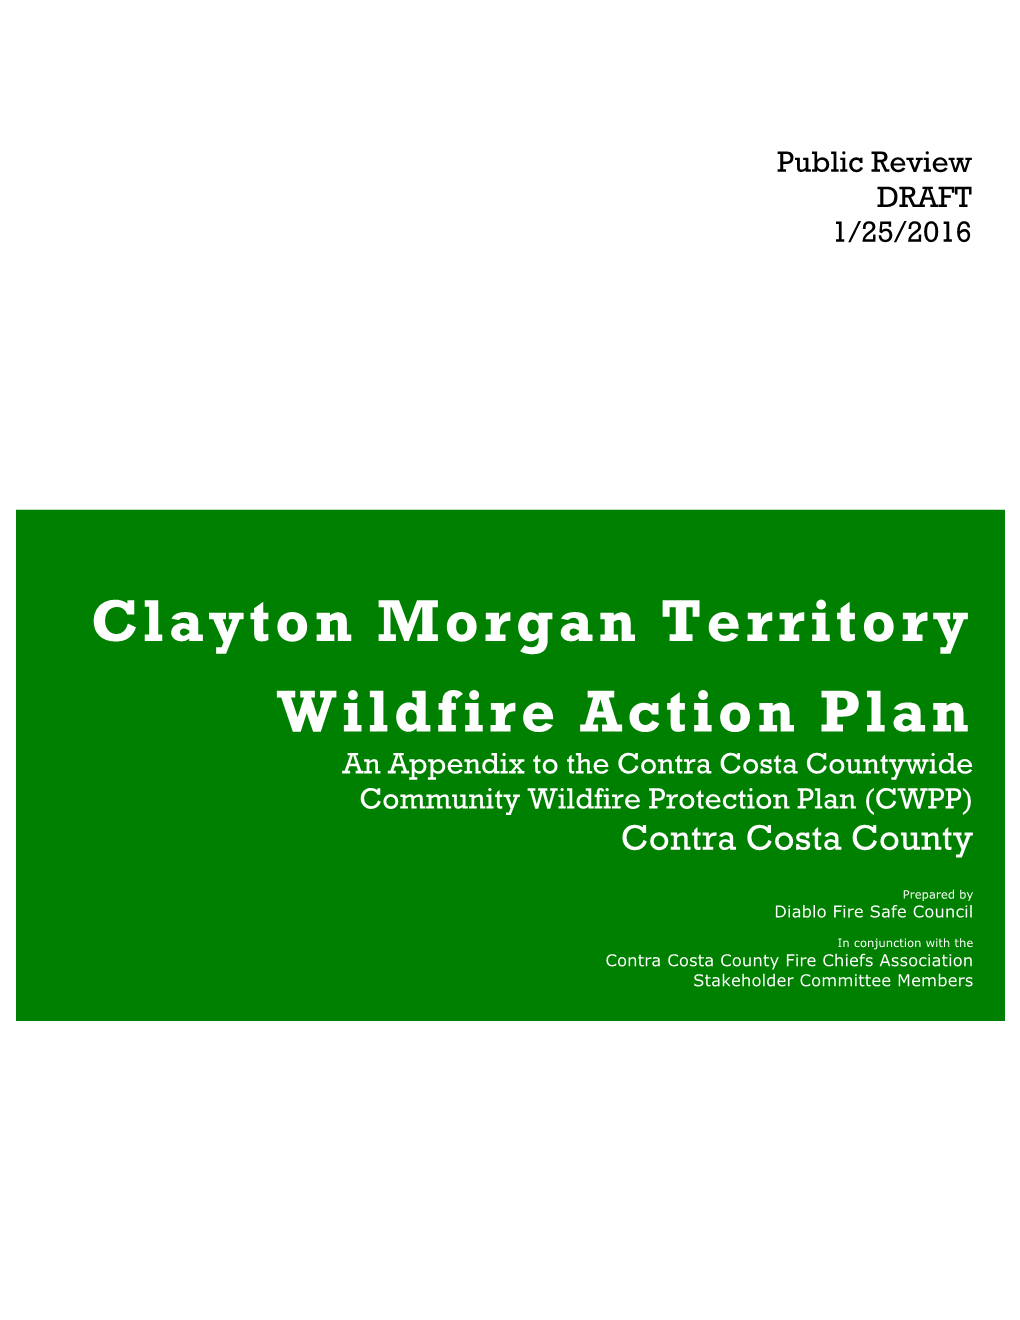 Draft Clayton Morgan Territory Fire Action Plan